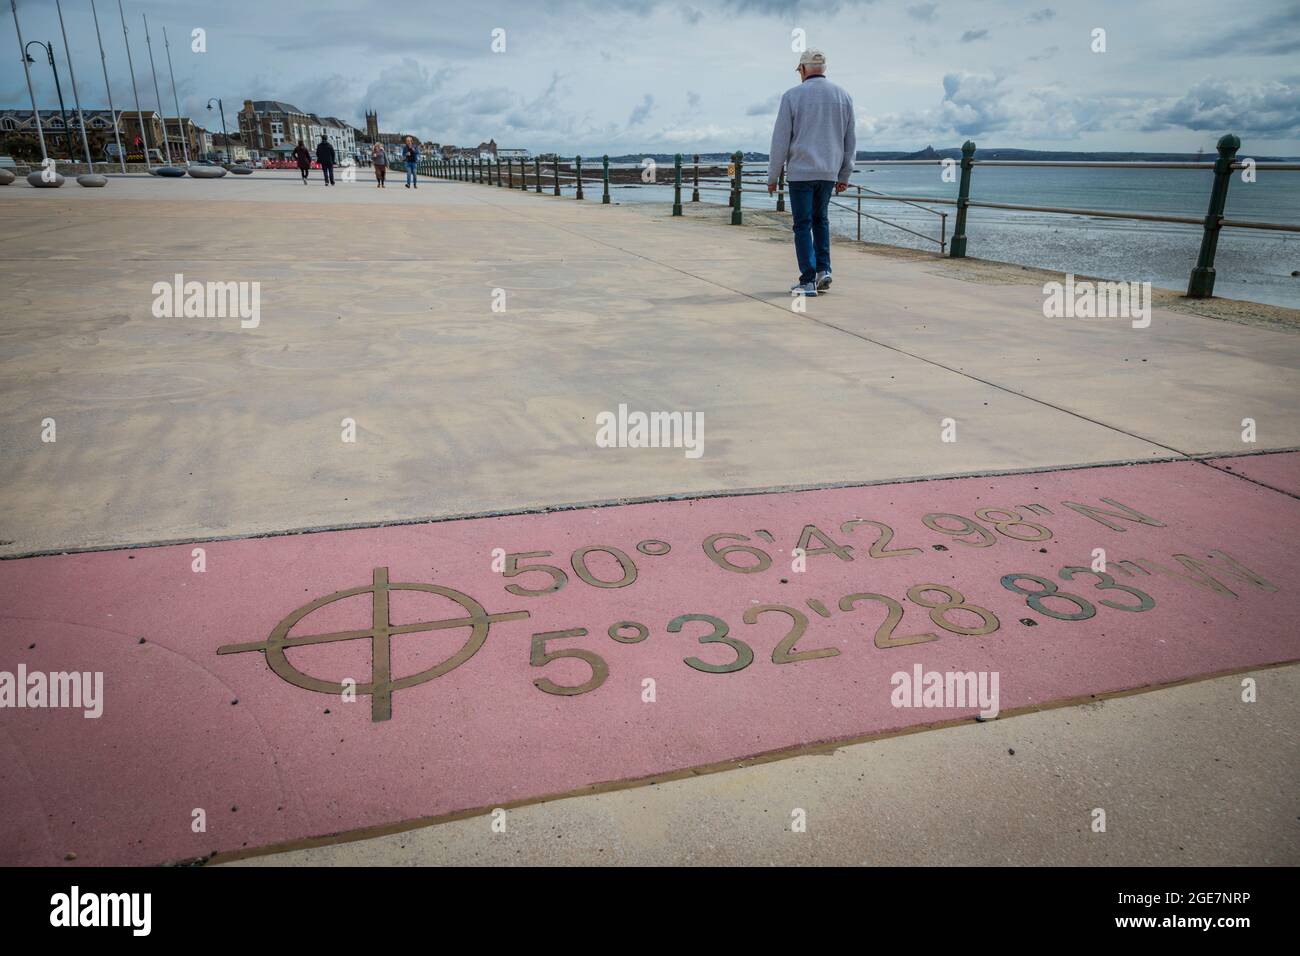 Marking of longitude and latitude on the promenade at Penzance, Cornwall, England. Stock Photo